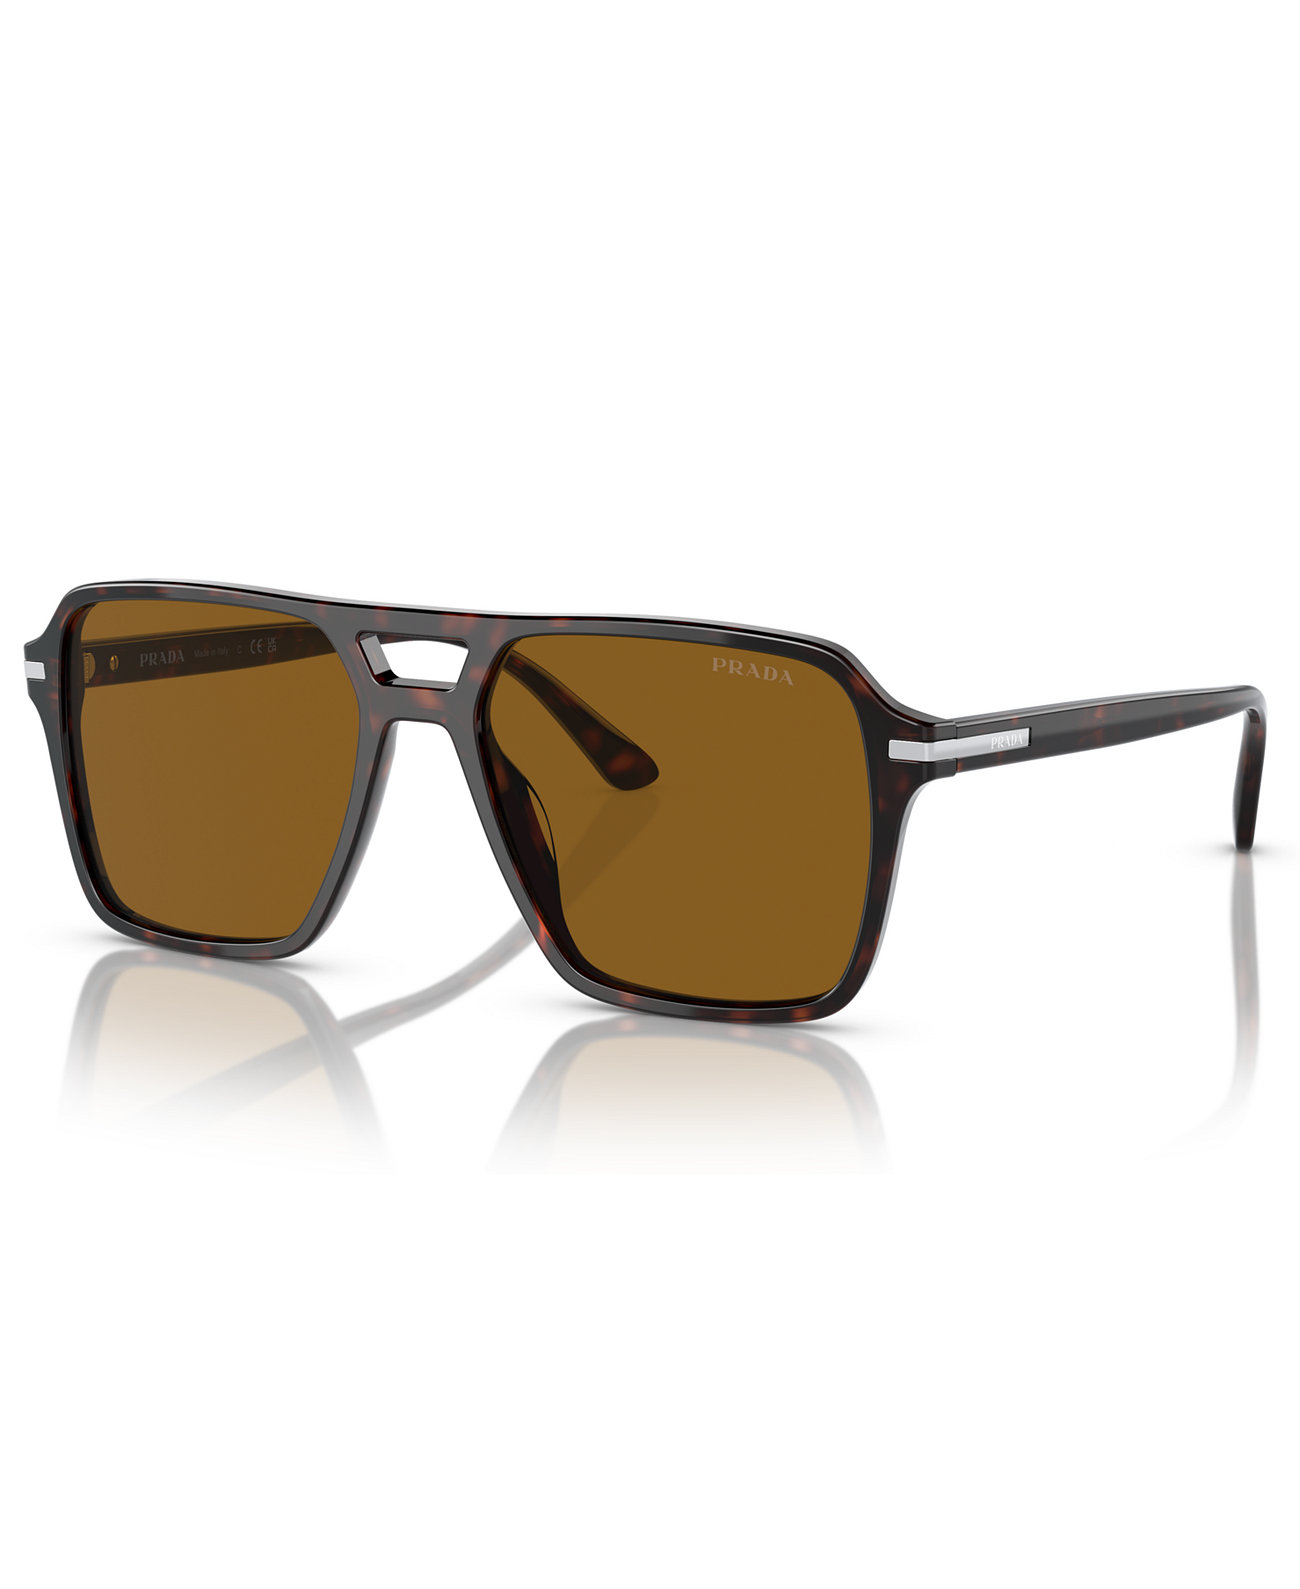 Men's Sunglasses PR 20YS Prada